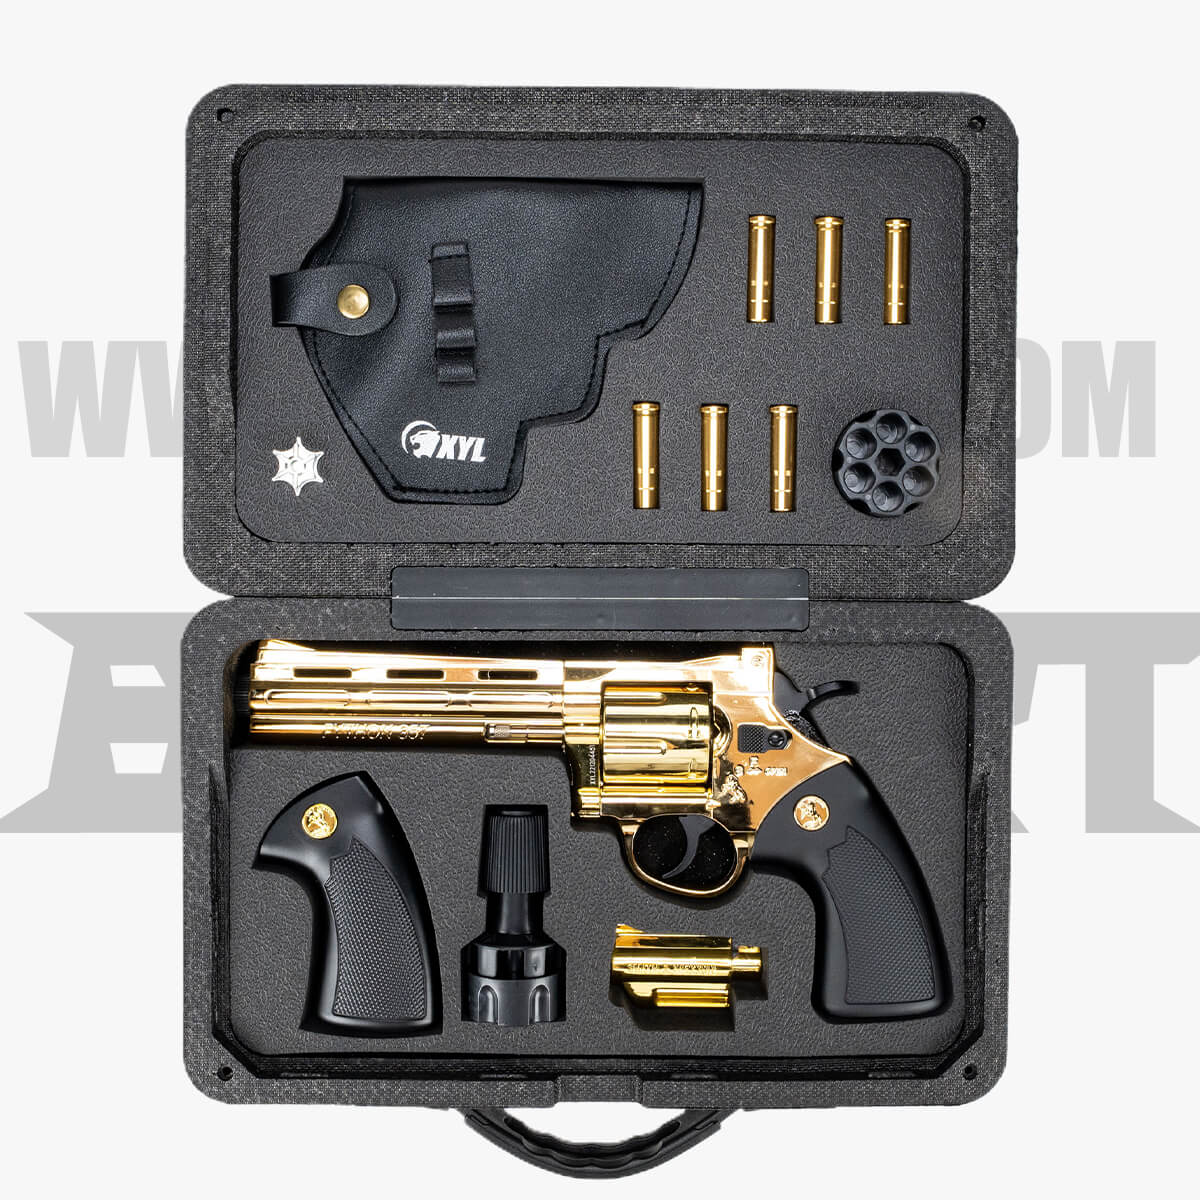 Limited Edition Python 357 Toy Revolver